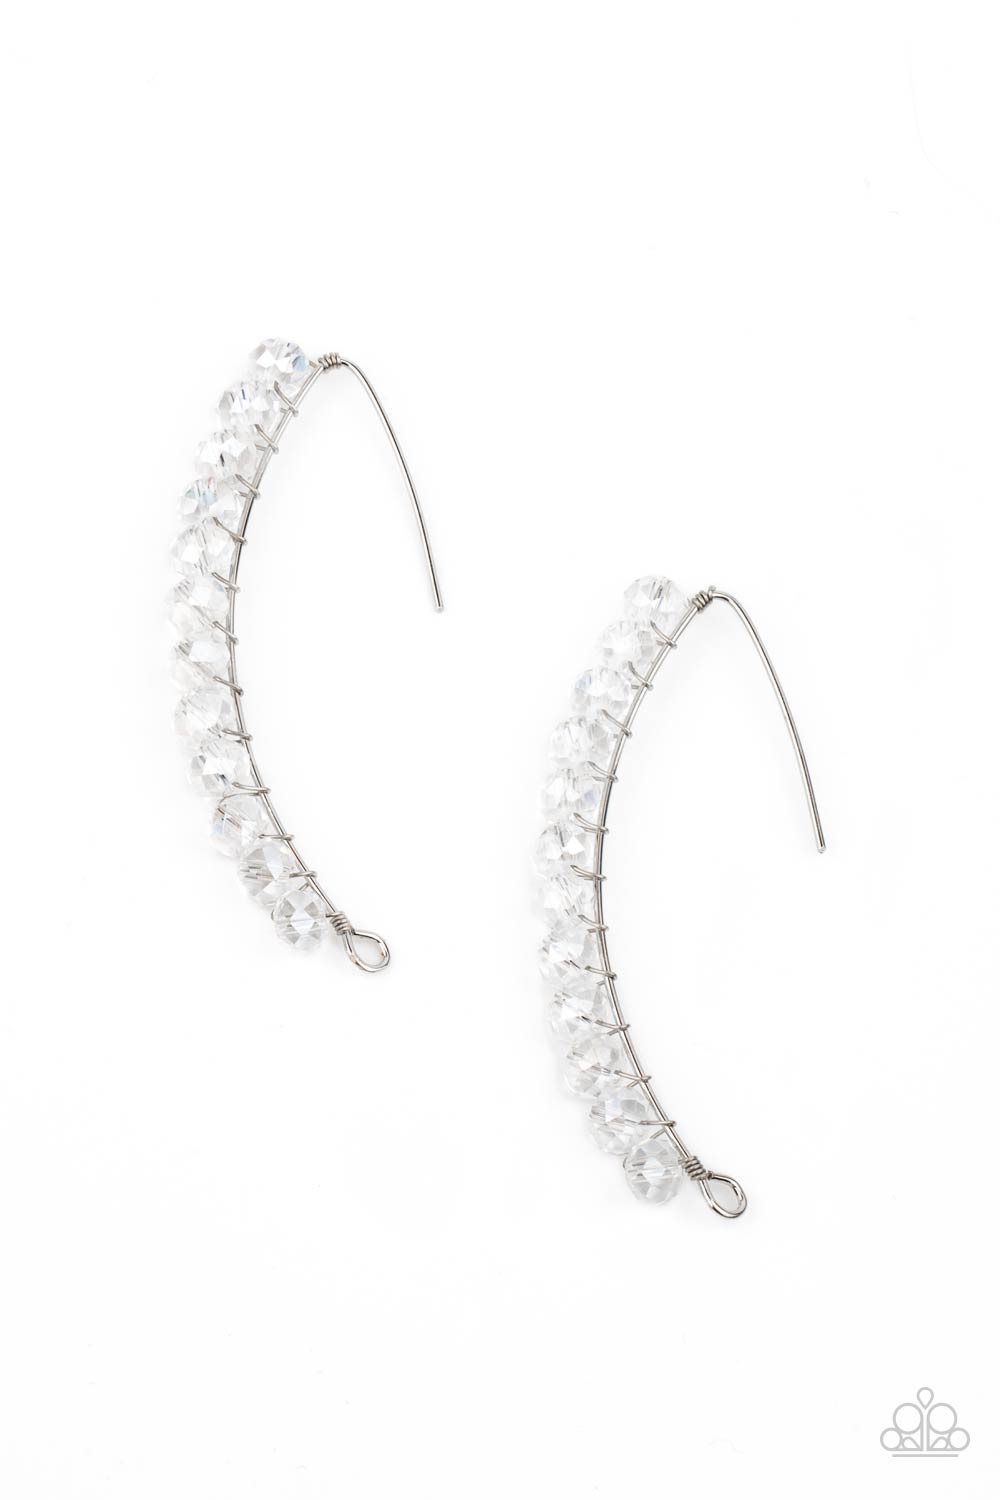 Paparazzi - GLOW Hanging Fruit - White Iridescent Earrings - Alies Bling Bar